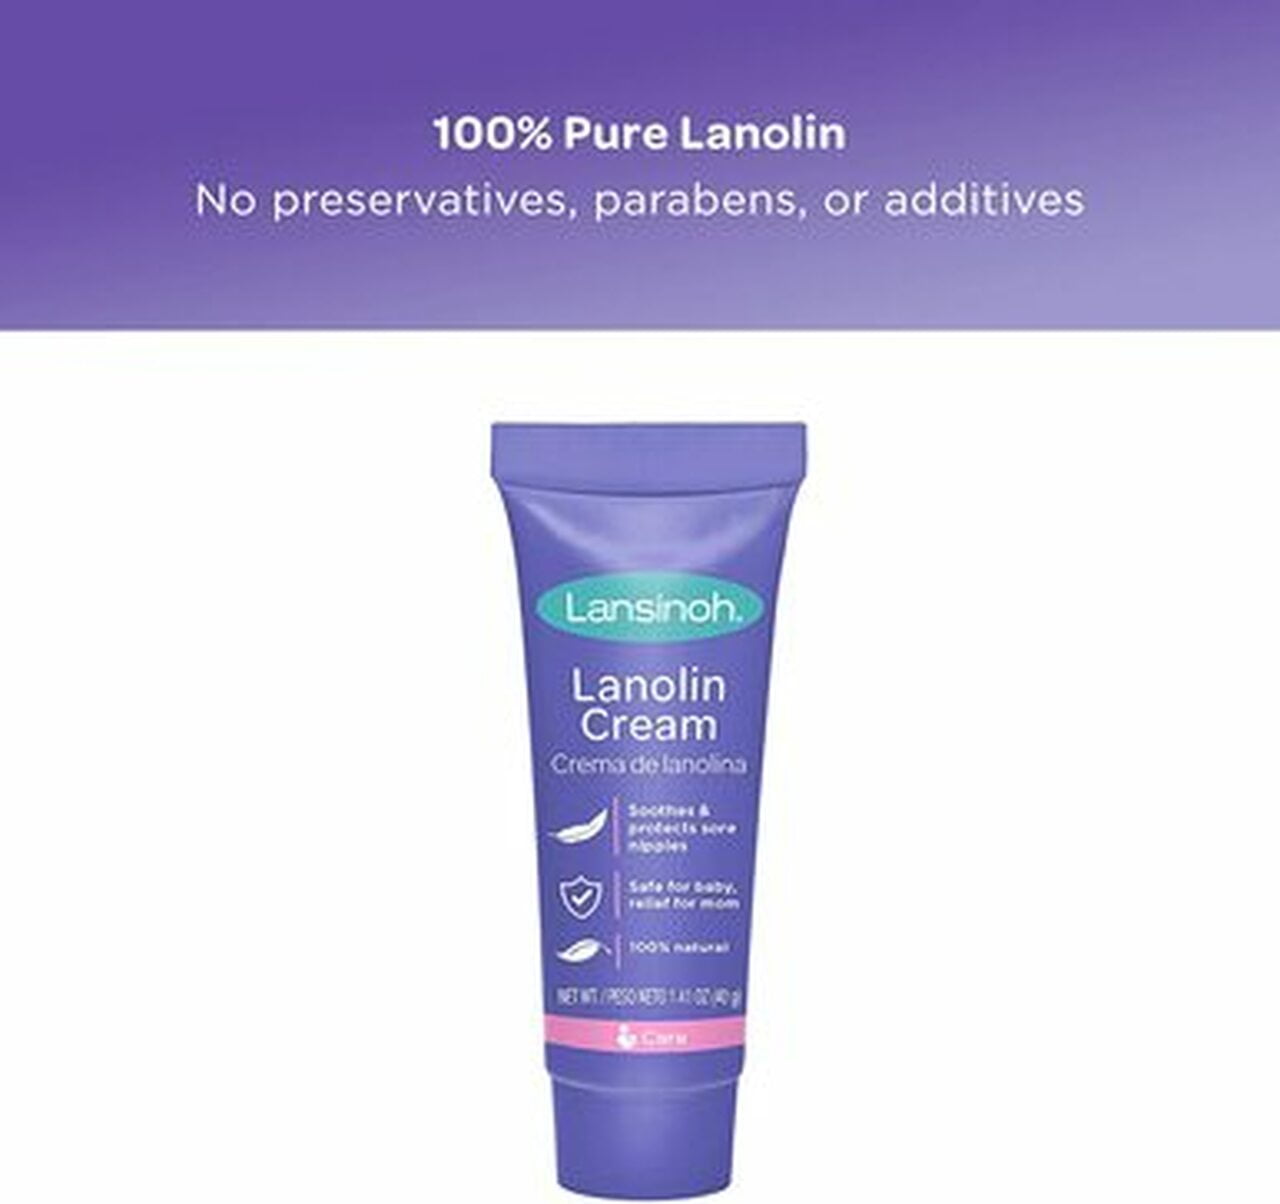 Lansinoh HPA Lanolin Nipple Cream 40g, Hypoallergenic 100% Natural —  Mountainside Medical Equipment